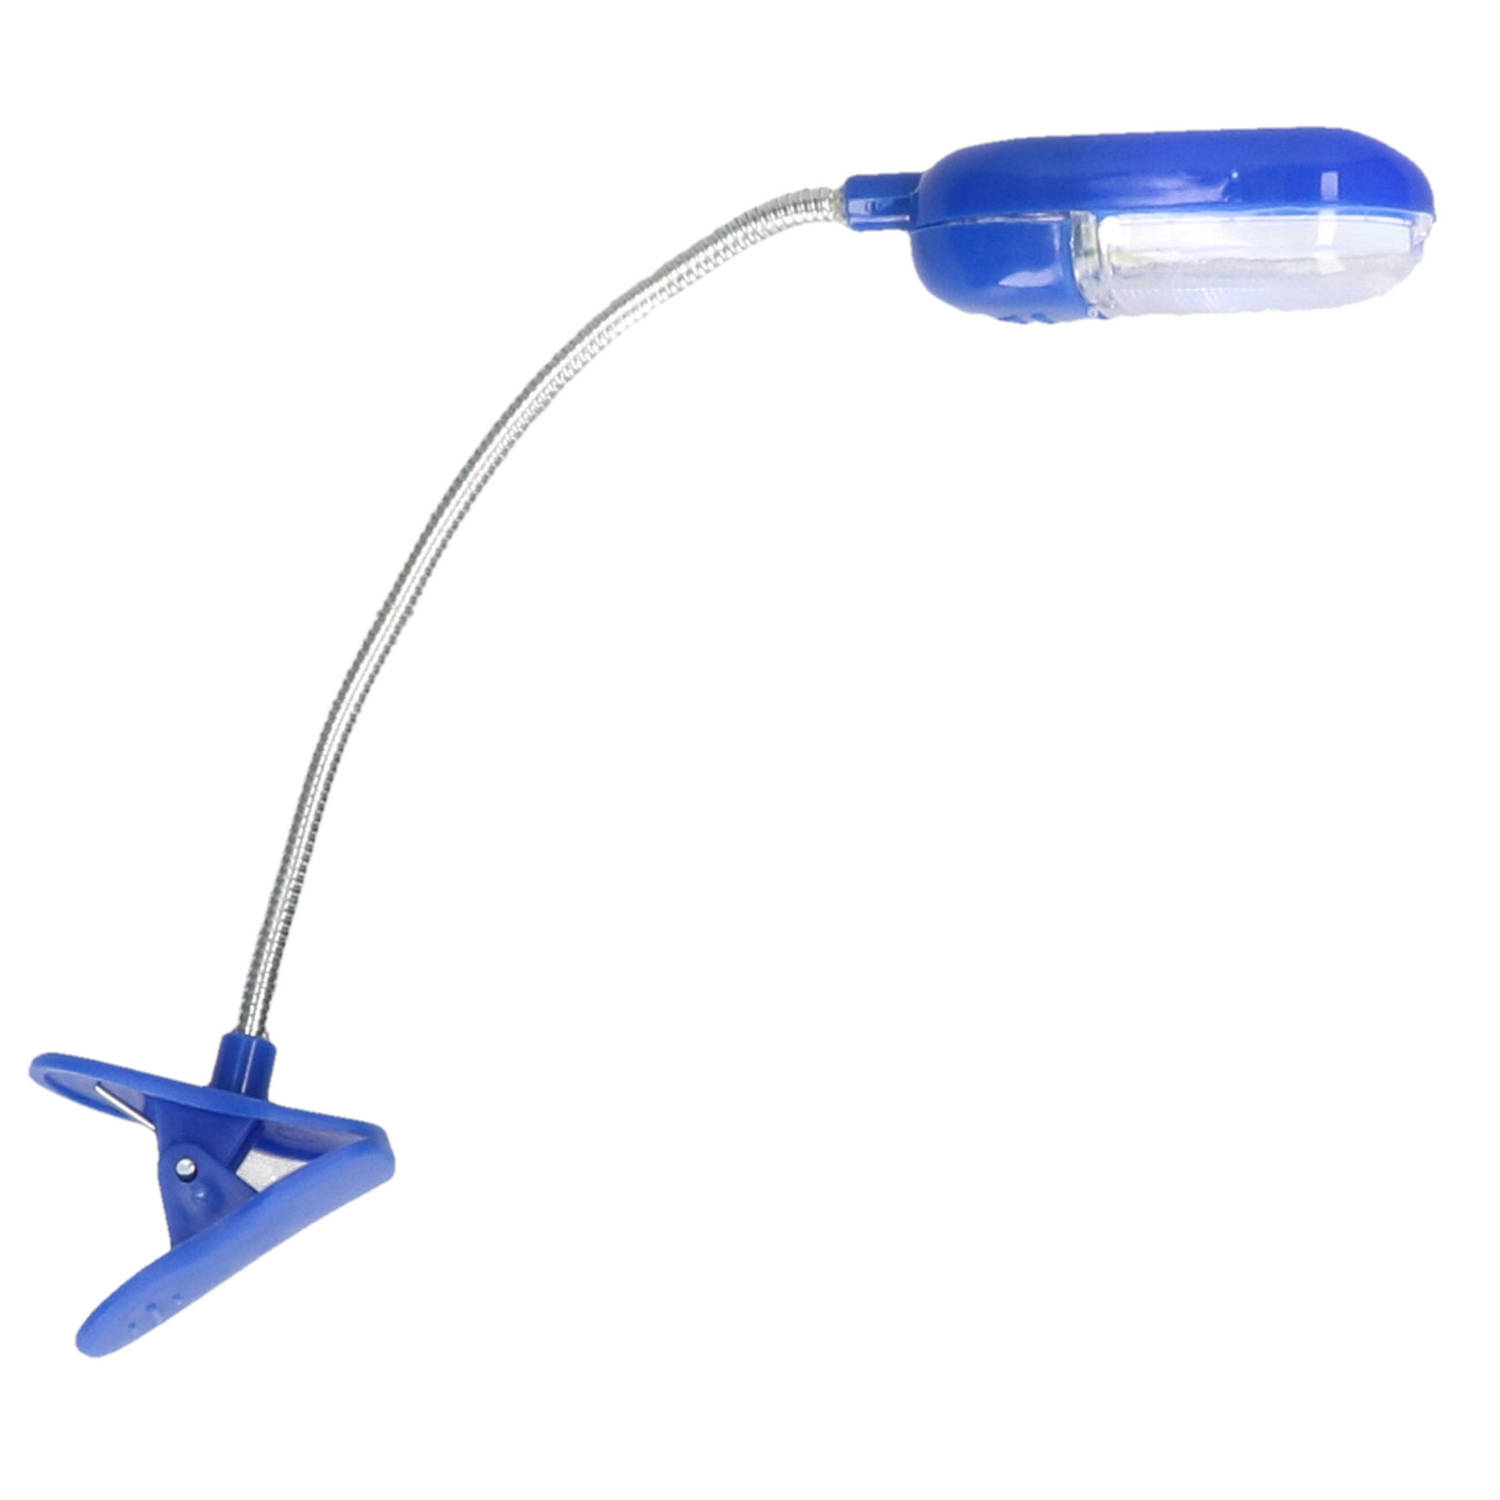 LED Leeslamp met klem - blauw - 25 cm - incl. batterijen - Klemlampen